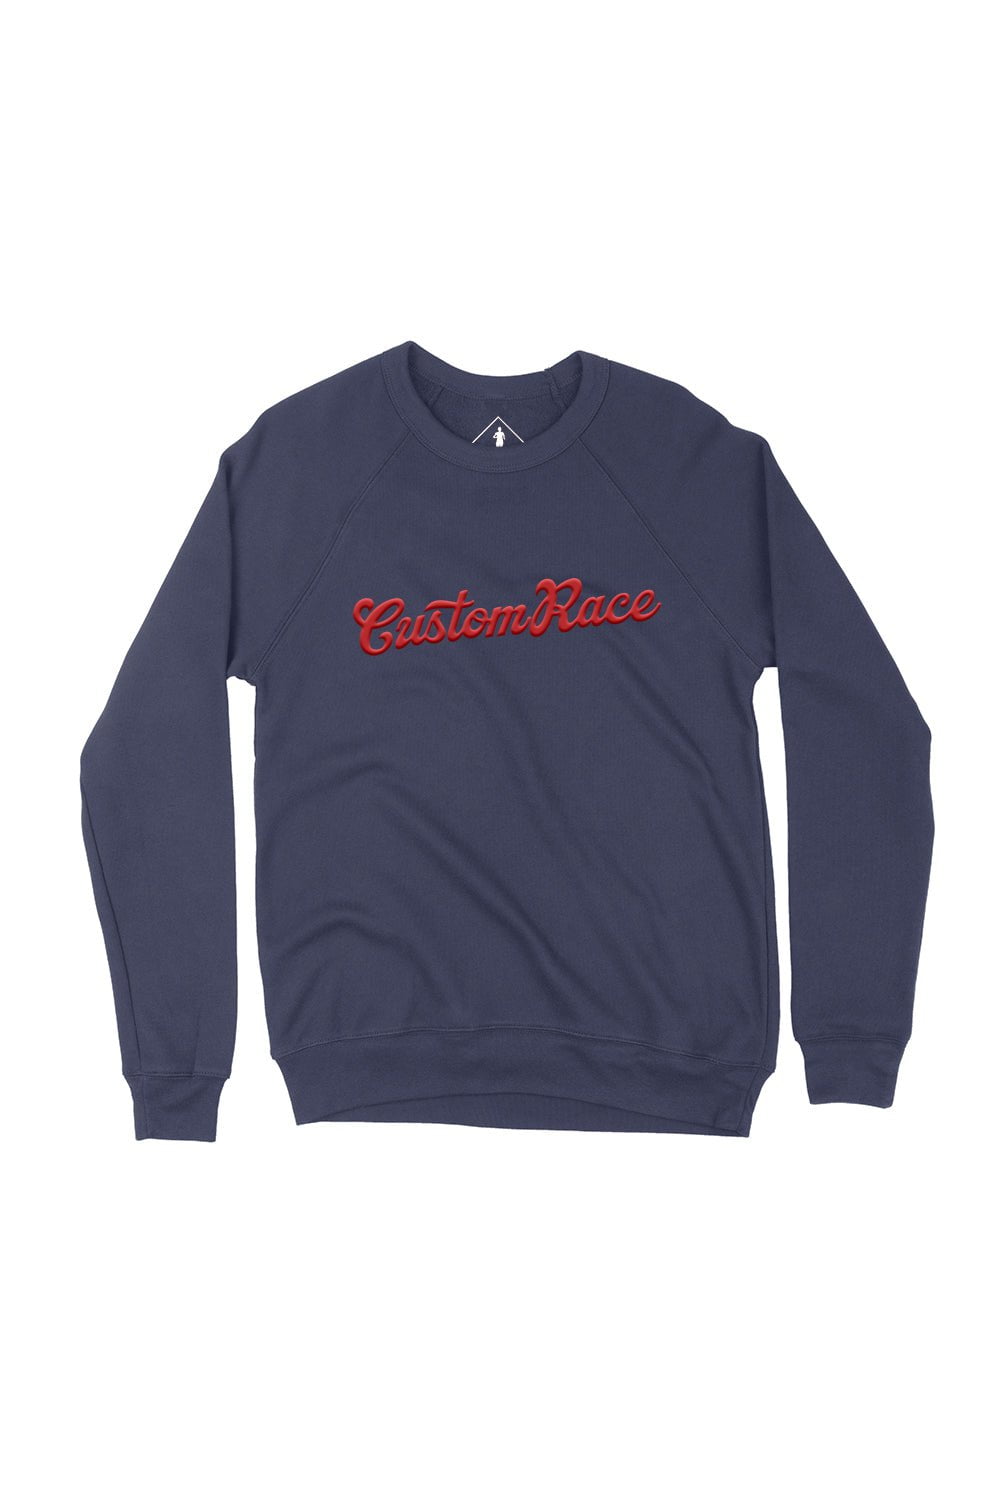 Sarah Marie Design Studio Sweatshirt XSmall / Navy / Red Custom Race/City Sweatshirt